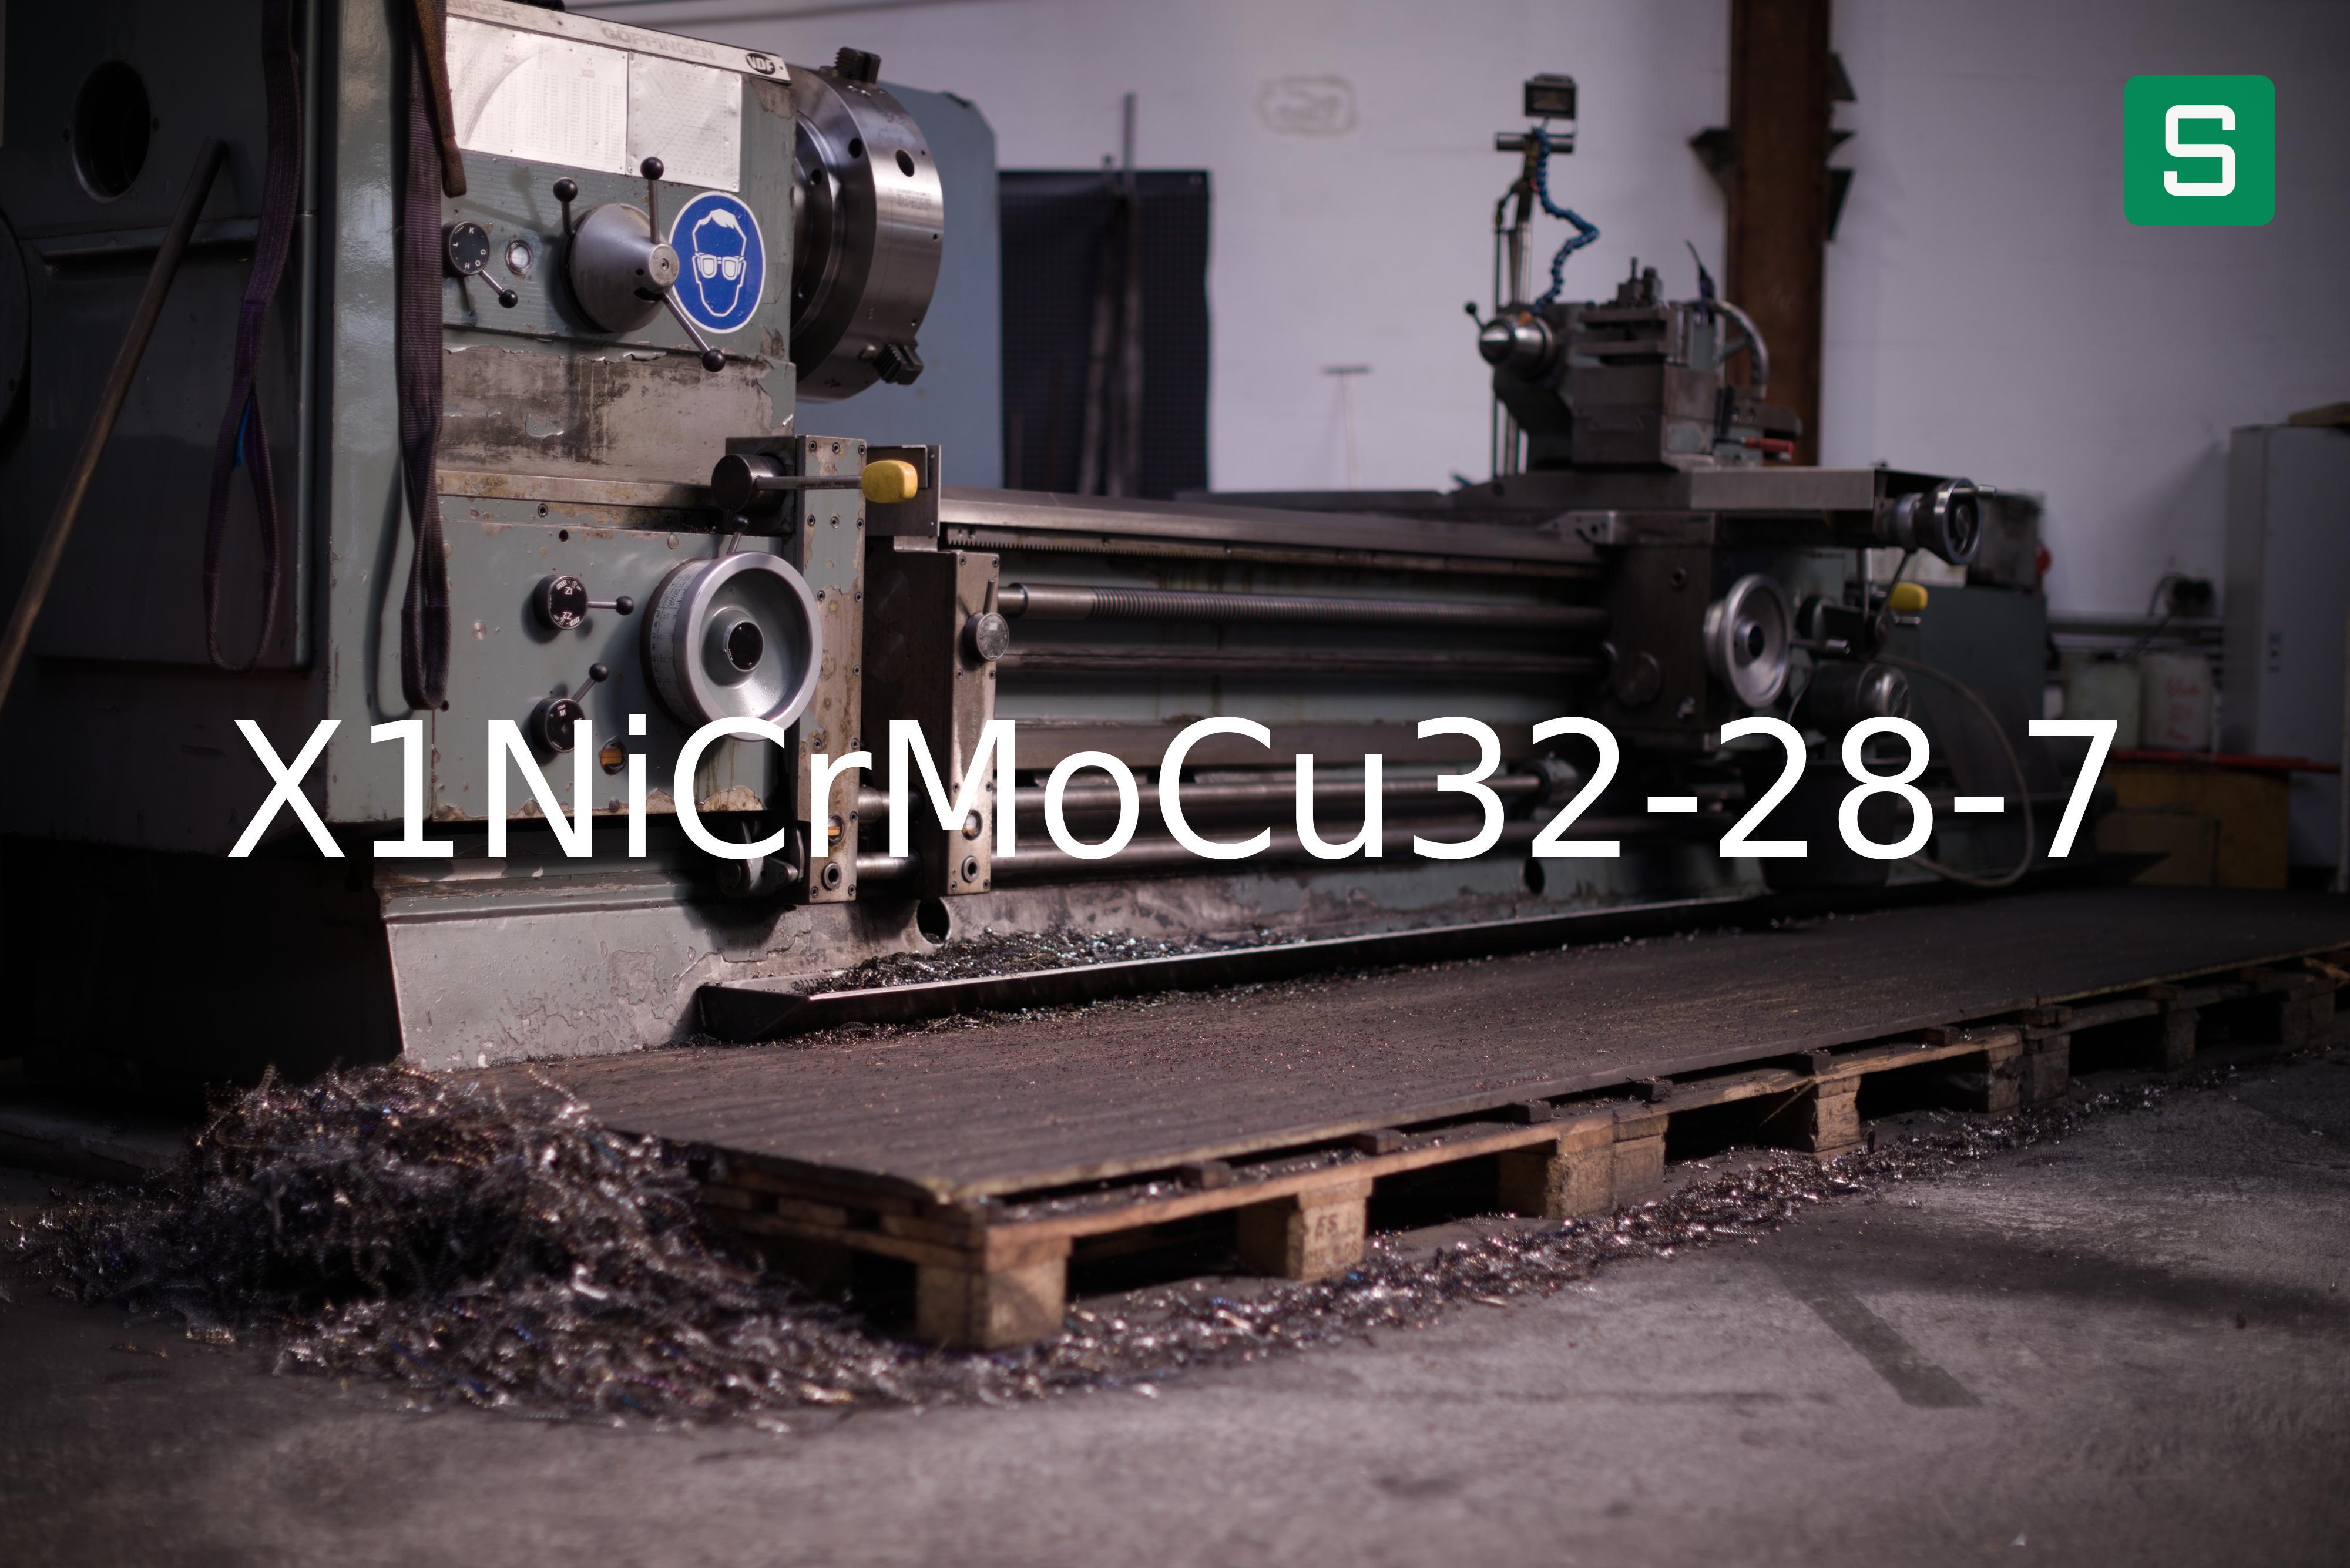 Steel Material: X1NiCrMoCu32-28-7